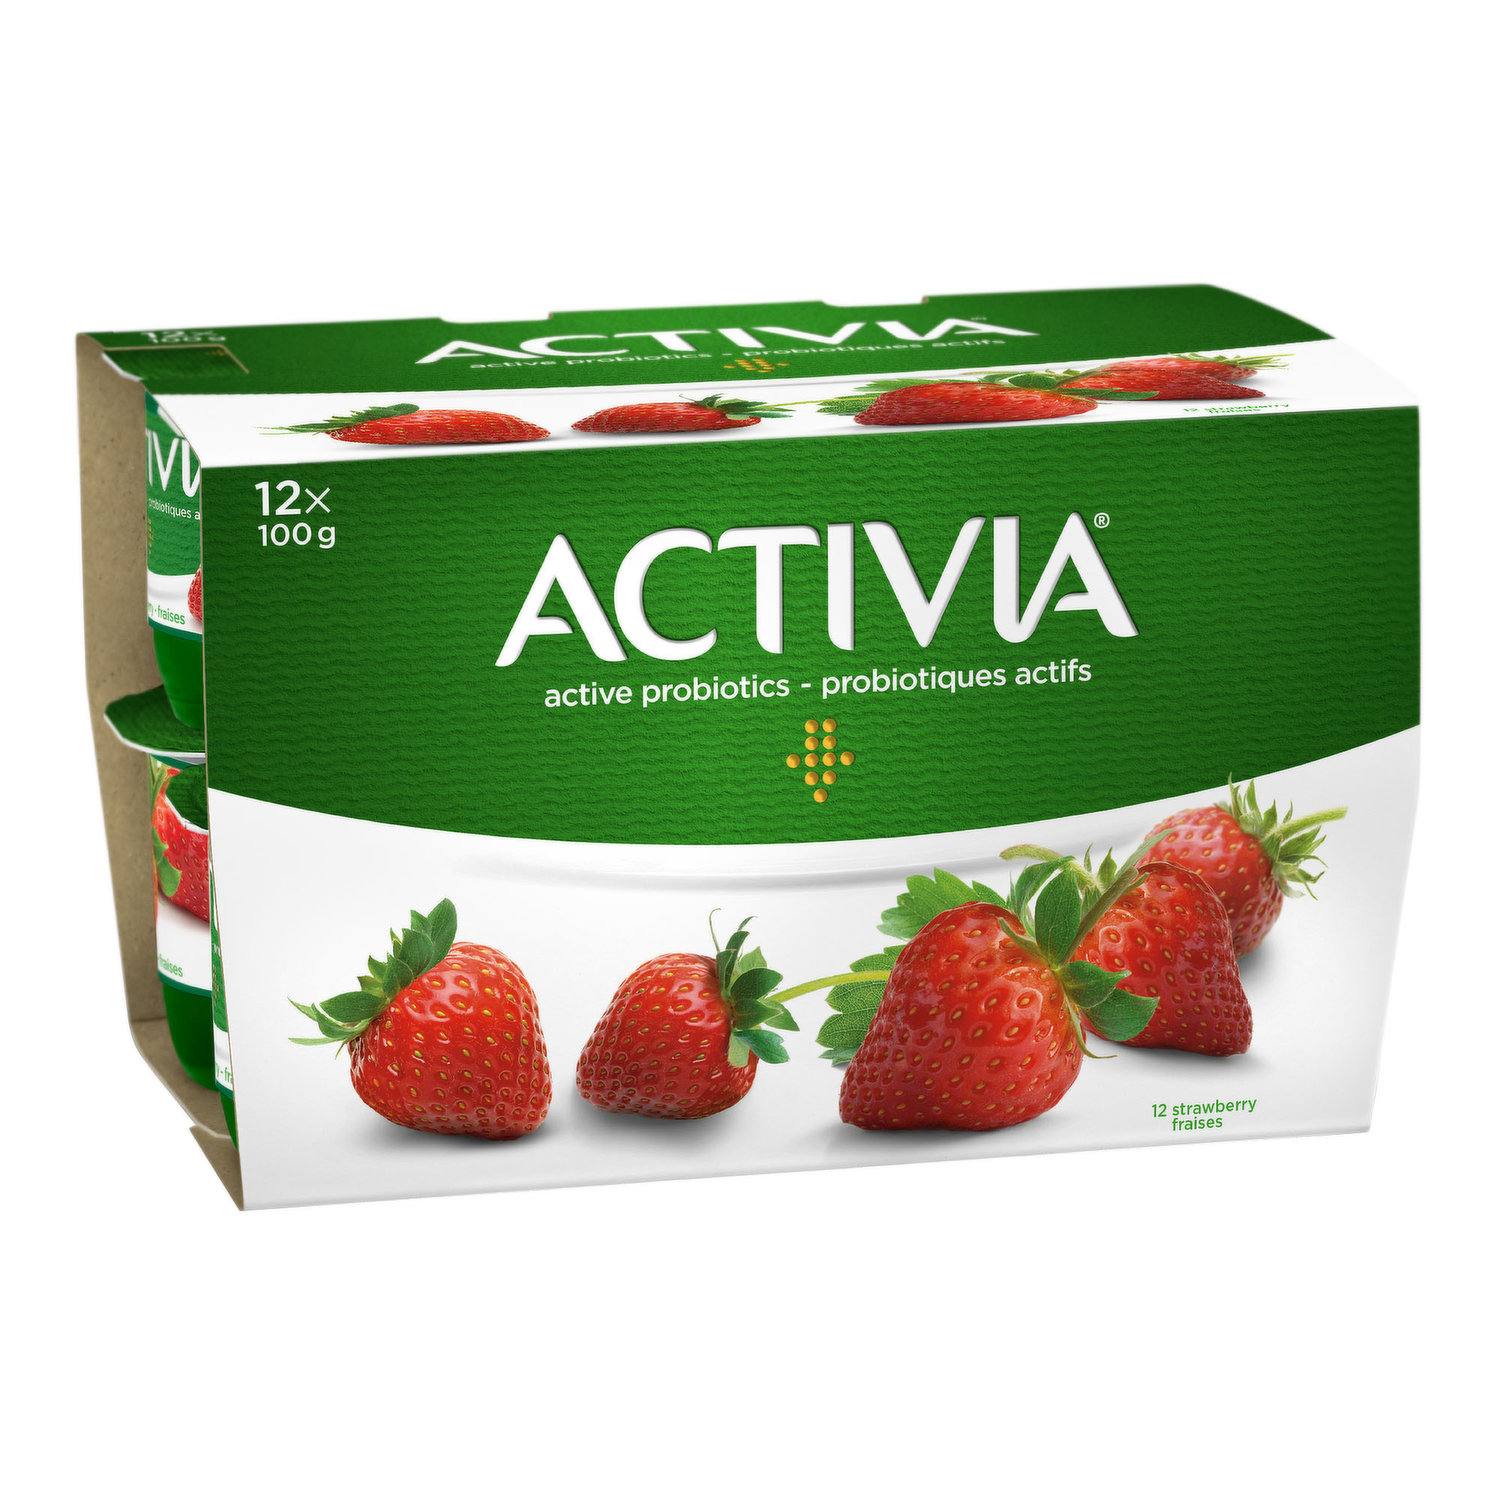 11-activia-strawberry-yogurt-nutrition-facts